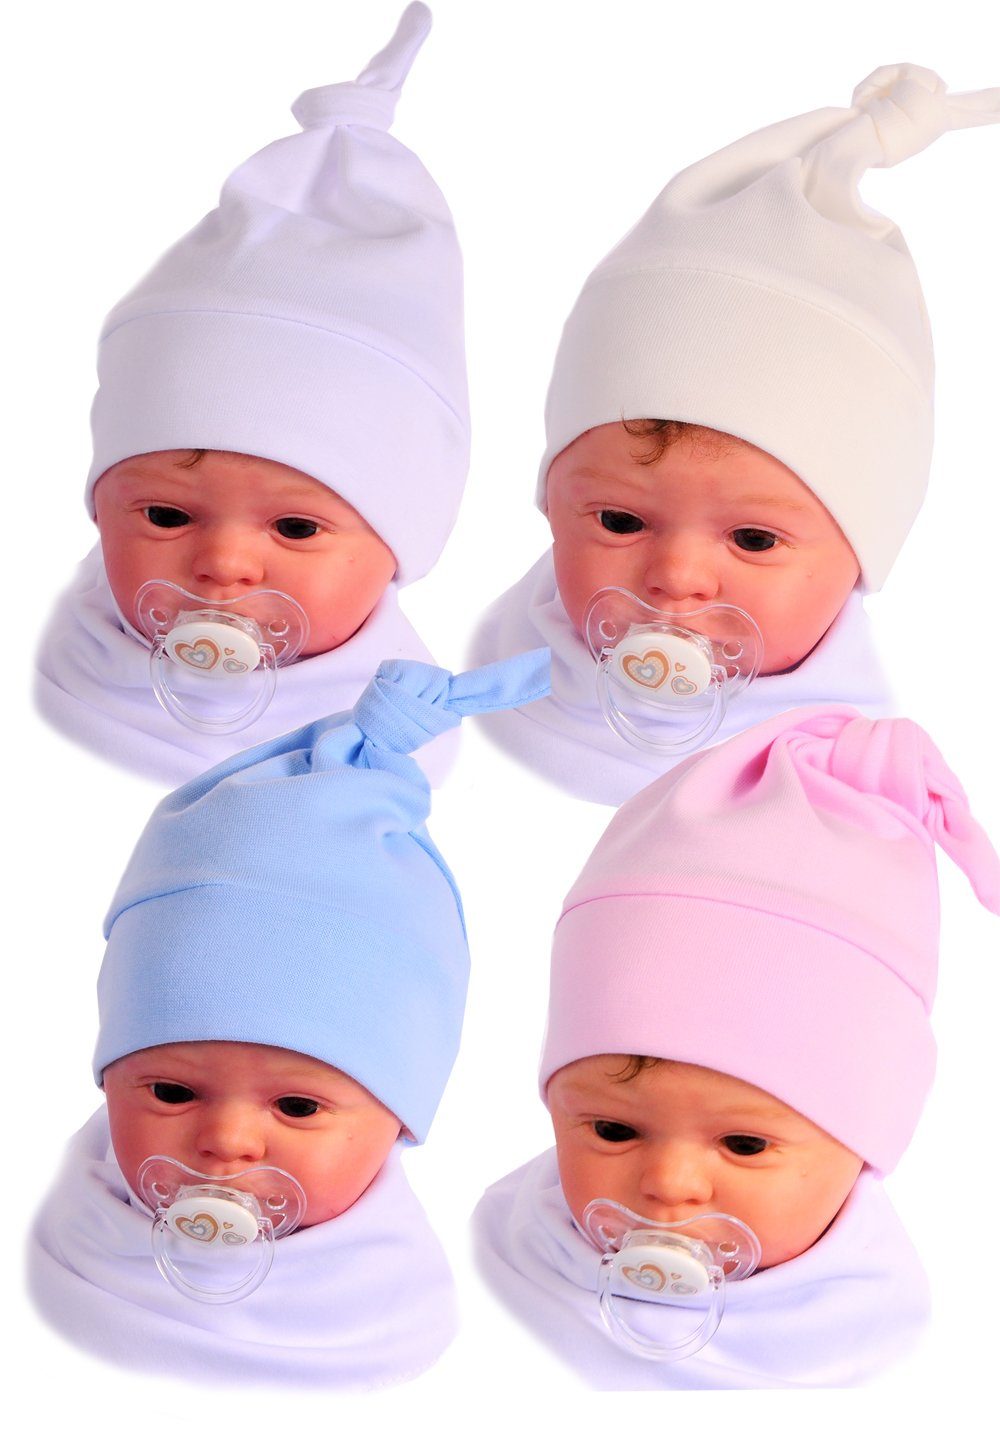 La Bortini Erstlingsmütze Baby Mütze Baby Mützchen Knotenmütze für Neugeborene Creme